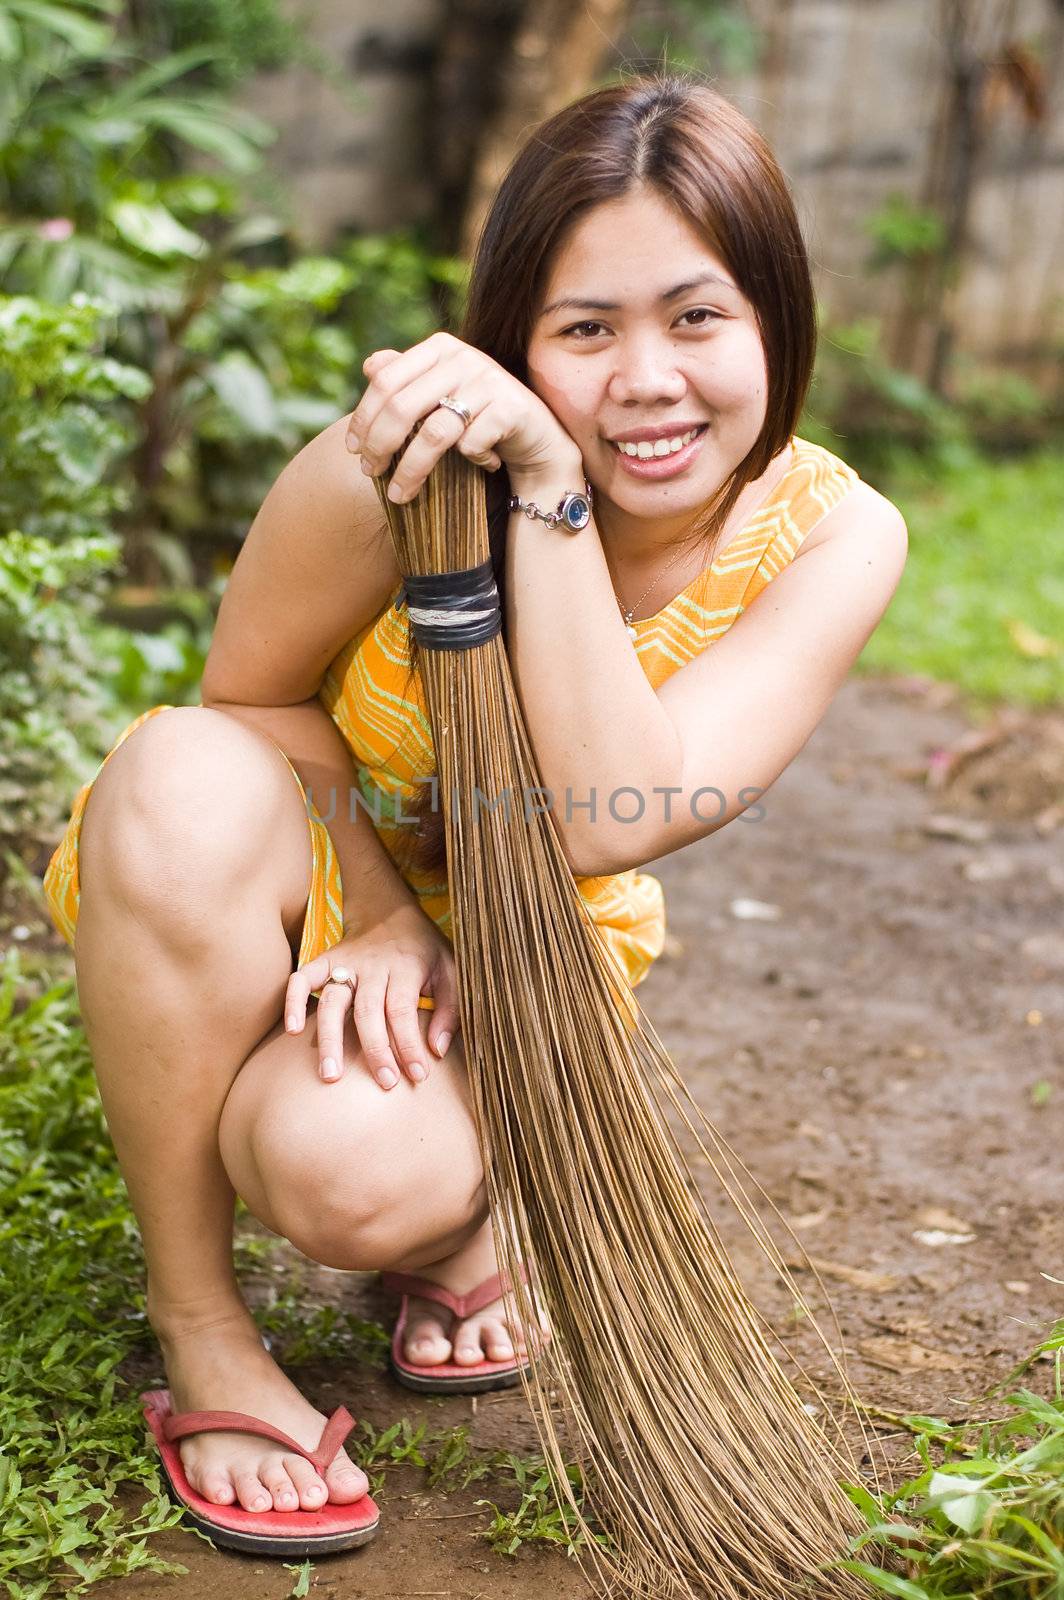 Cute Lady with Broom by markrubrico